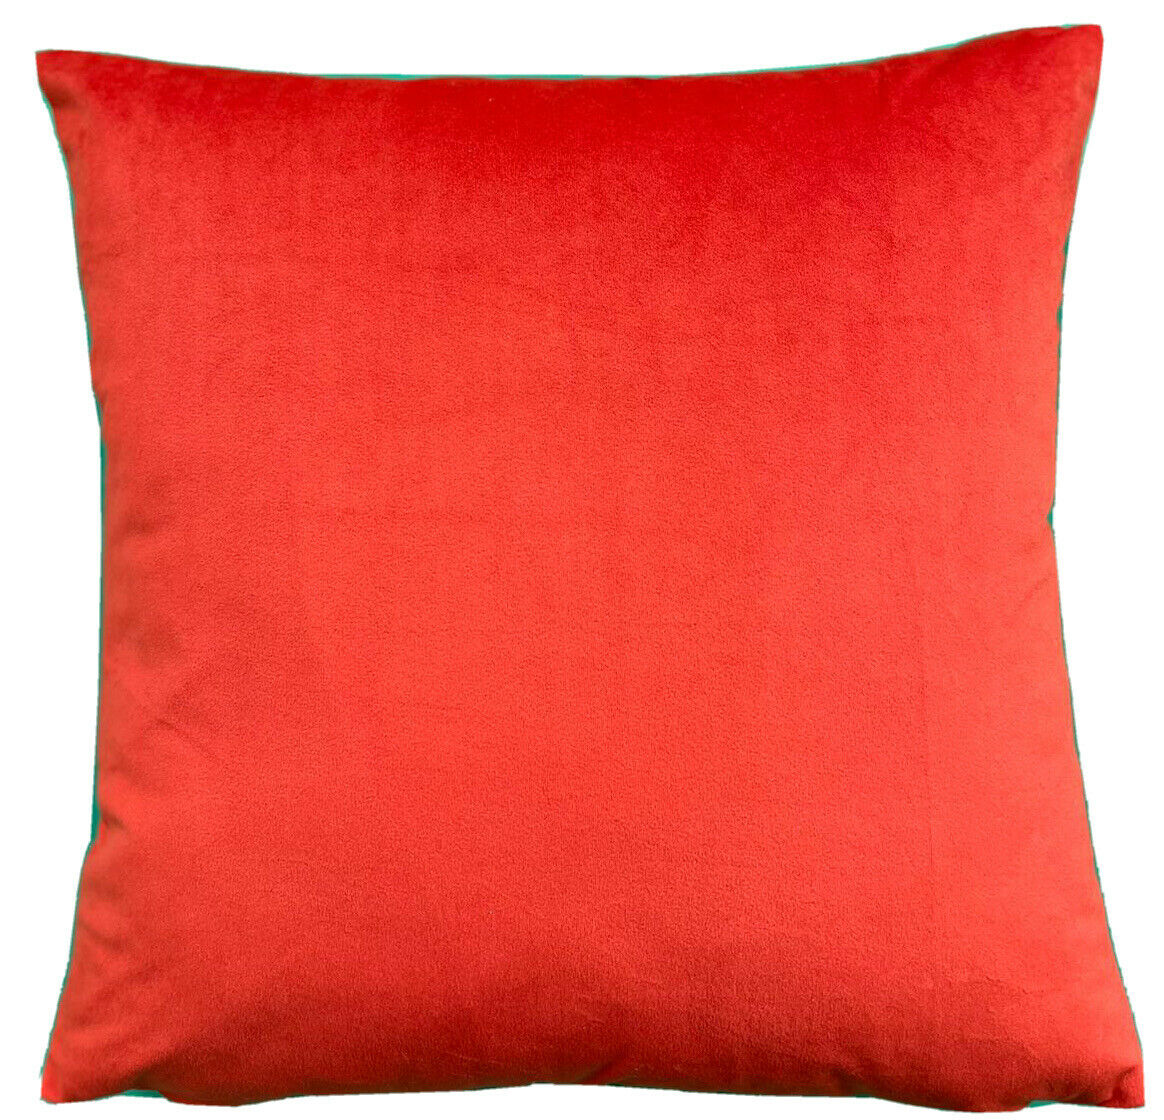 Red Cushion Cover Oriental Japanese Kimono Throw Pillow Case Printed Fabric Orange Red Blue 18"